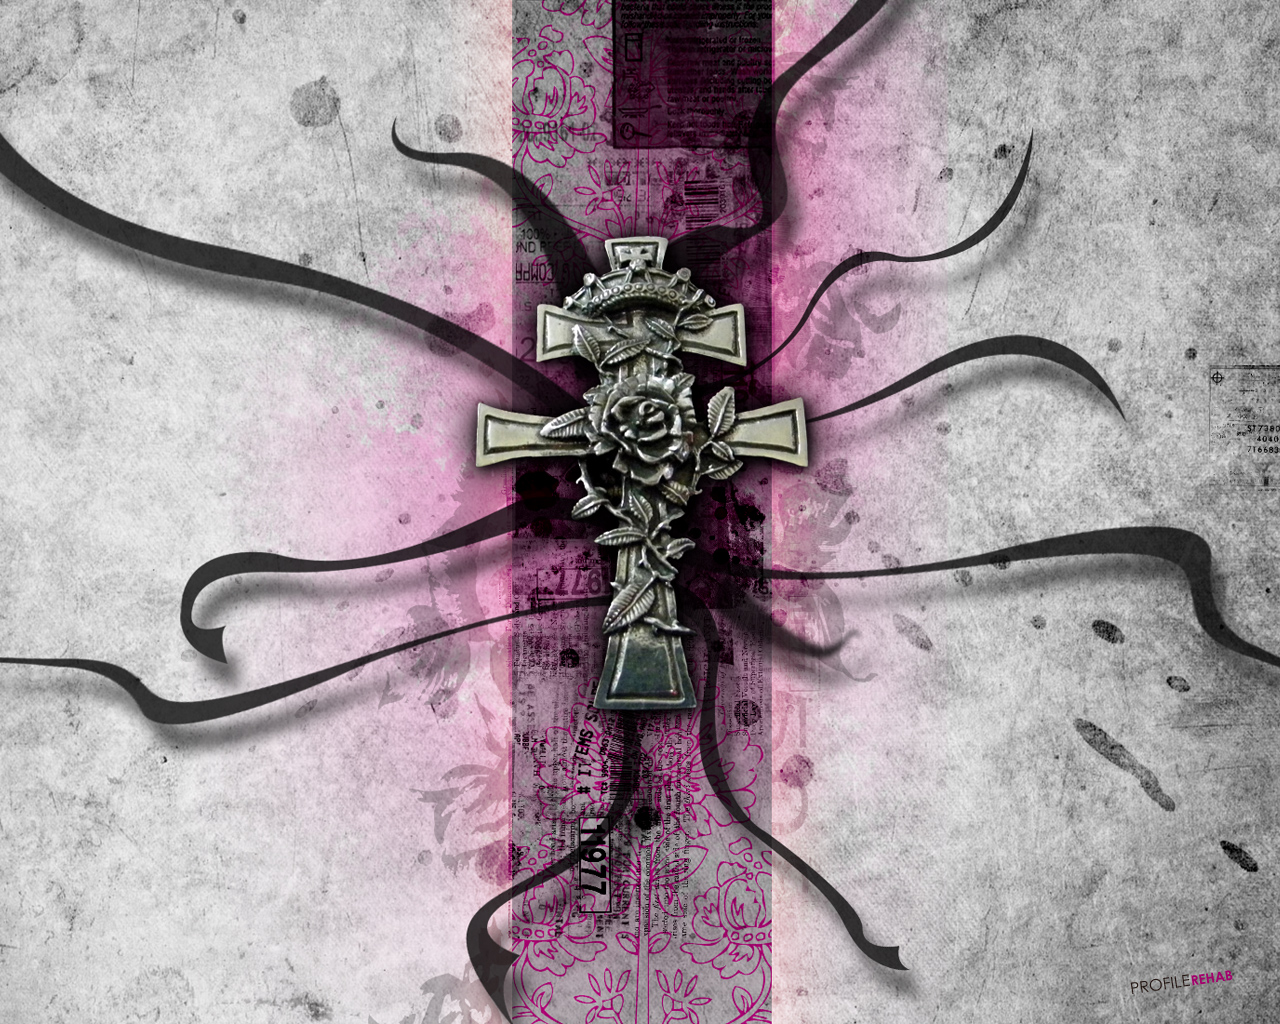 1280x1024 Pink  Black Cross Wallpaper  Grunge Goth Wallpaper with Cross   Wallpaper Download  Profilerehab